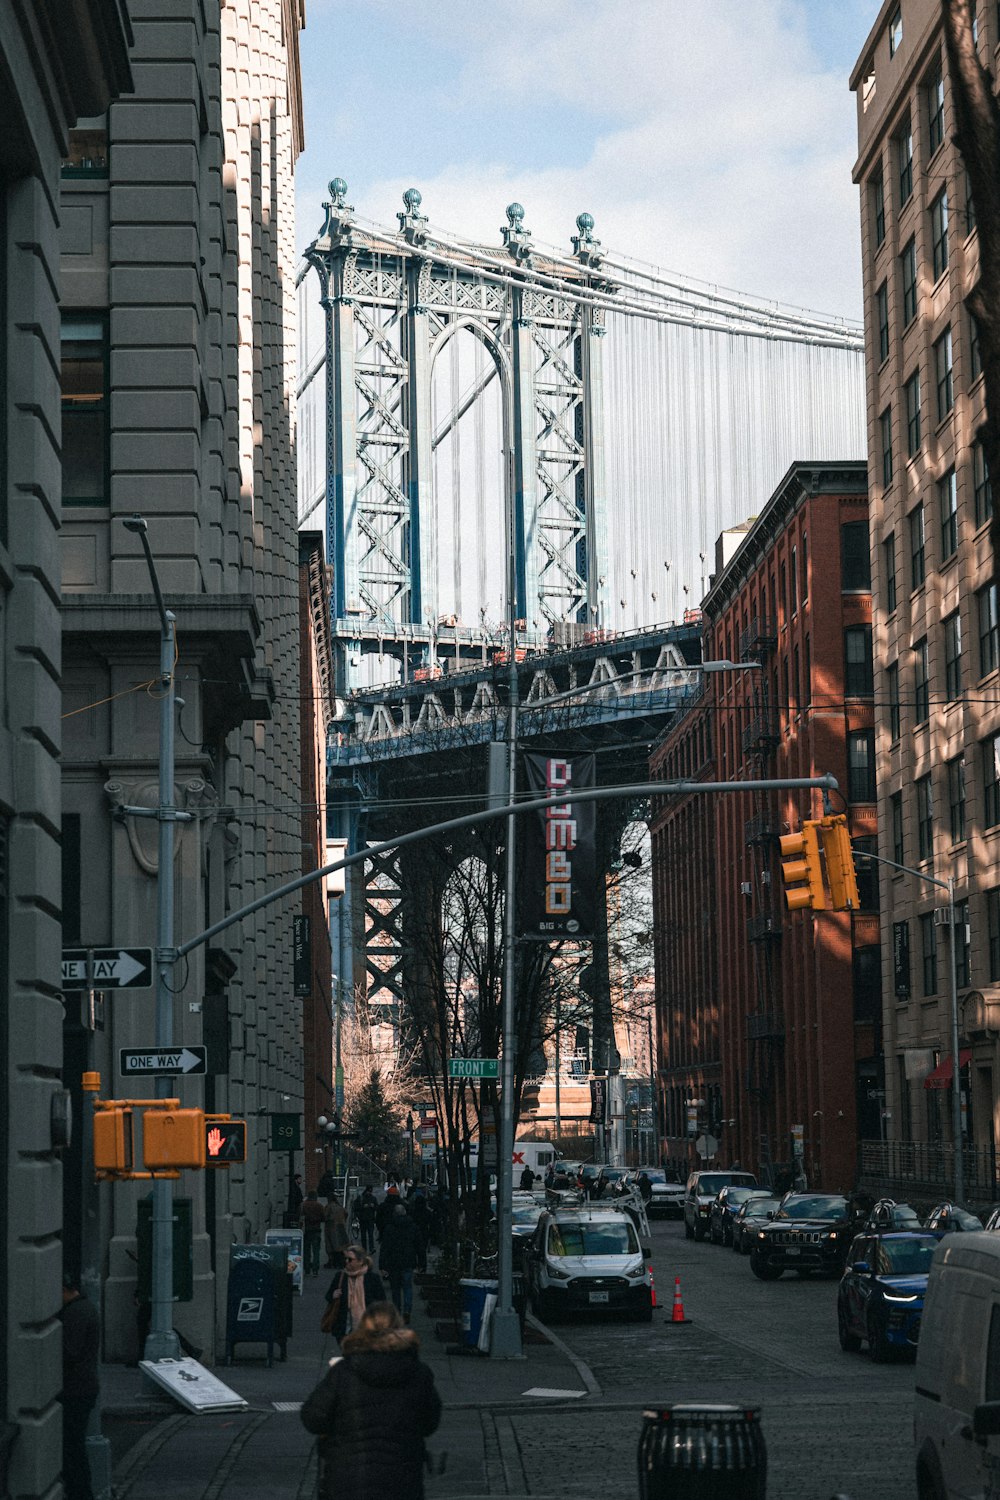 a view of a bridge over a city street